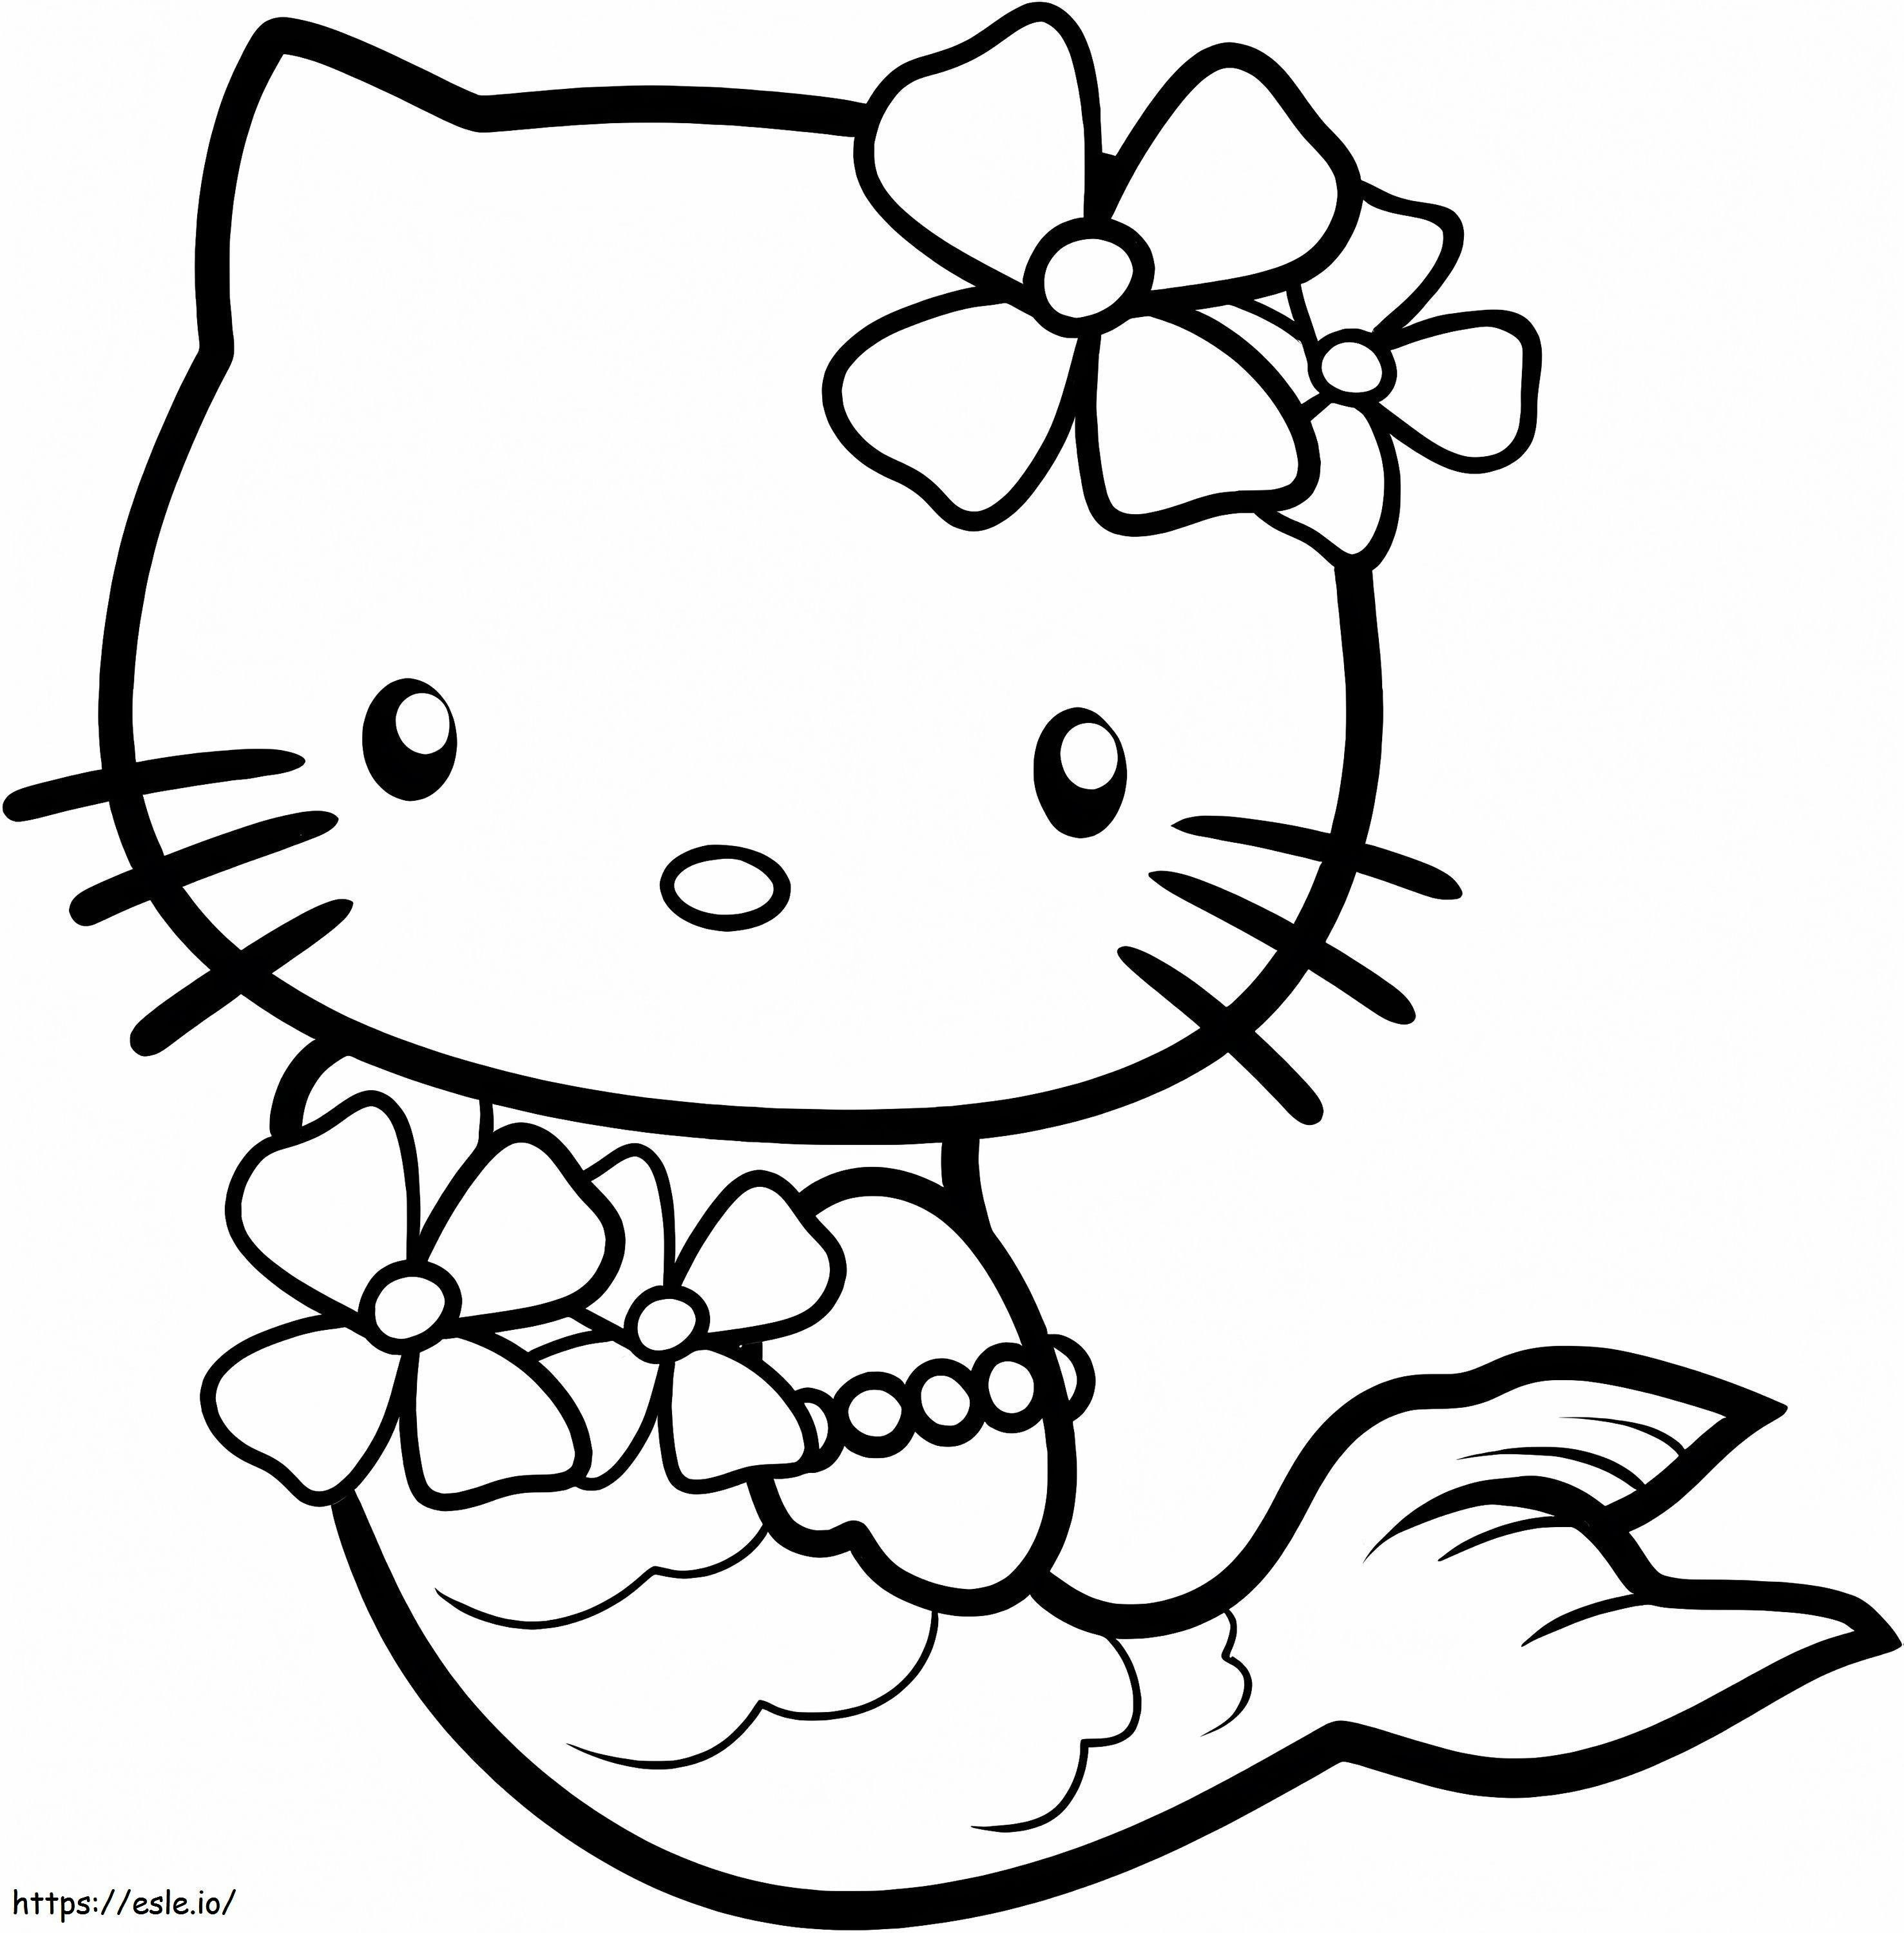 Coloriage Sirène Kitty à imprimer dessin